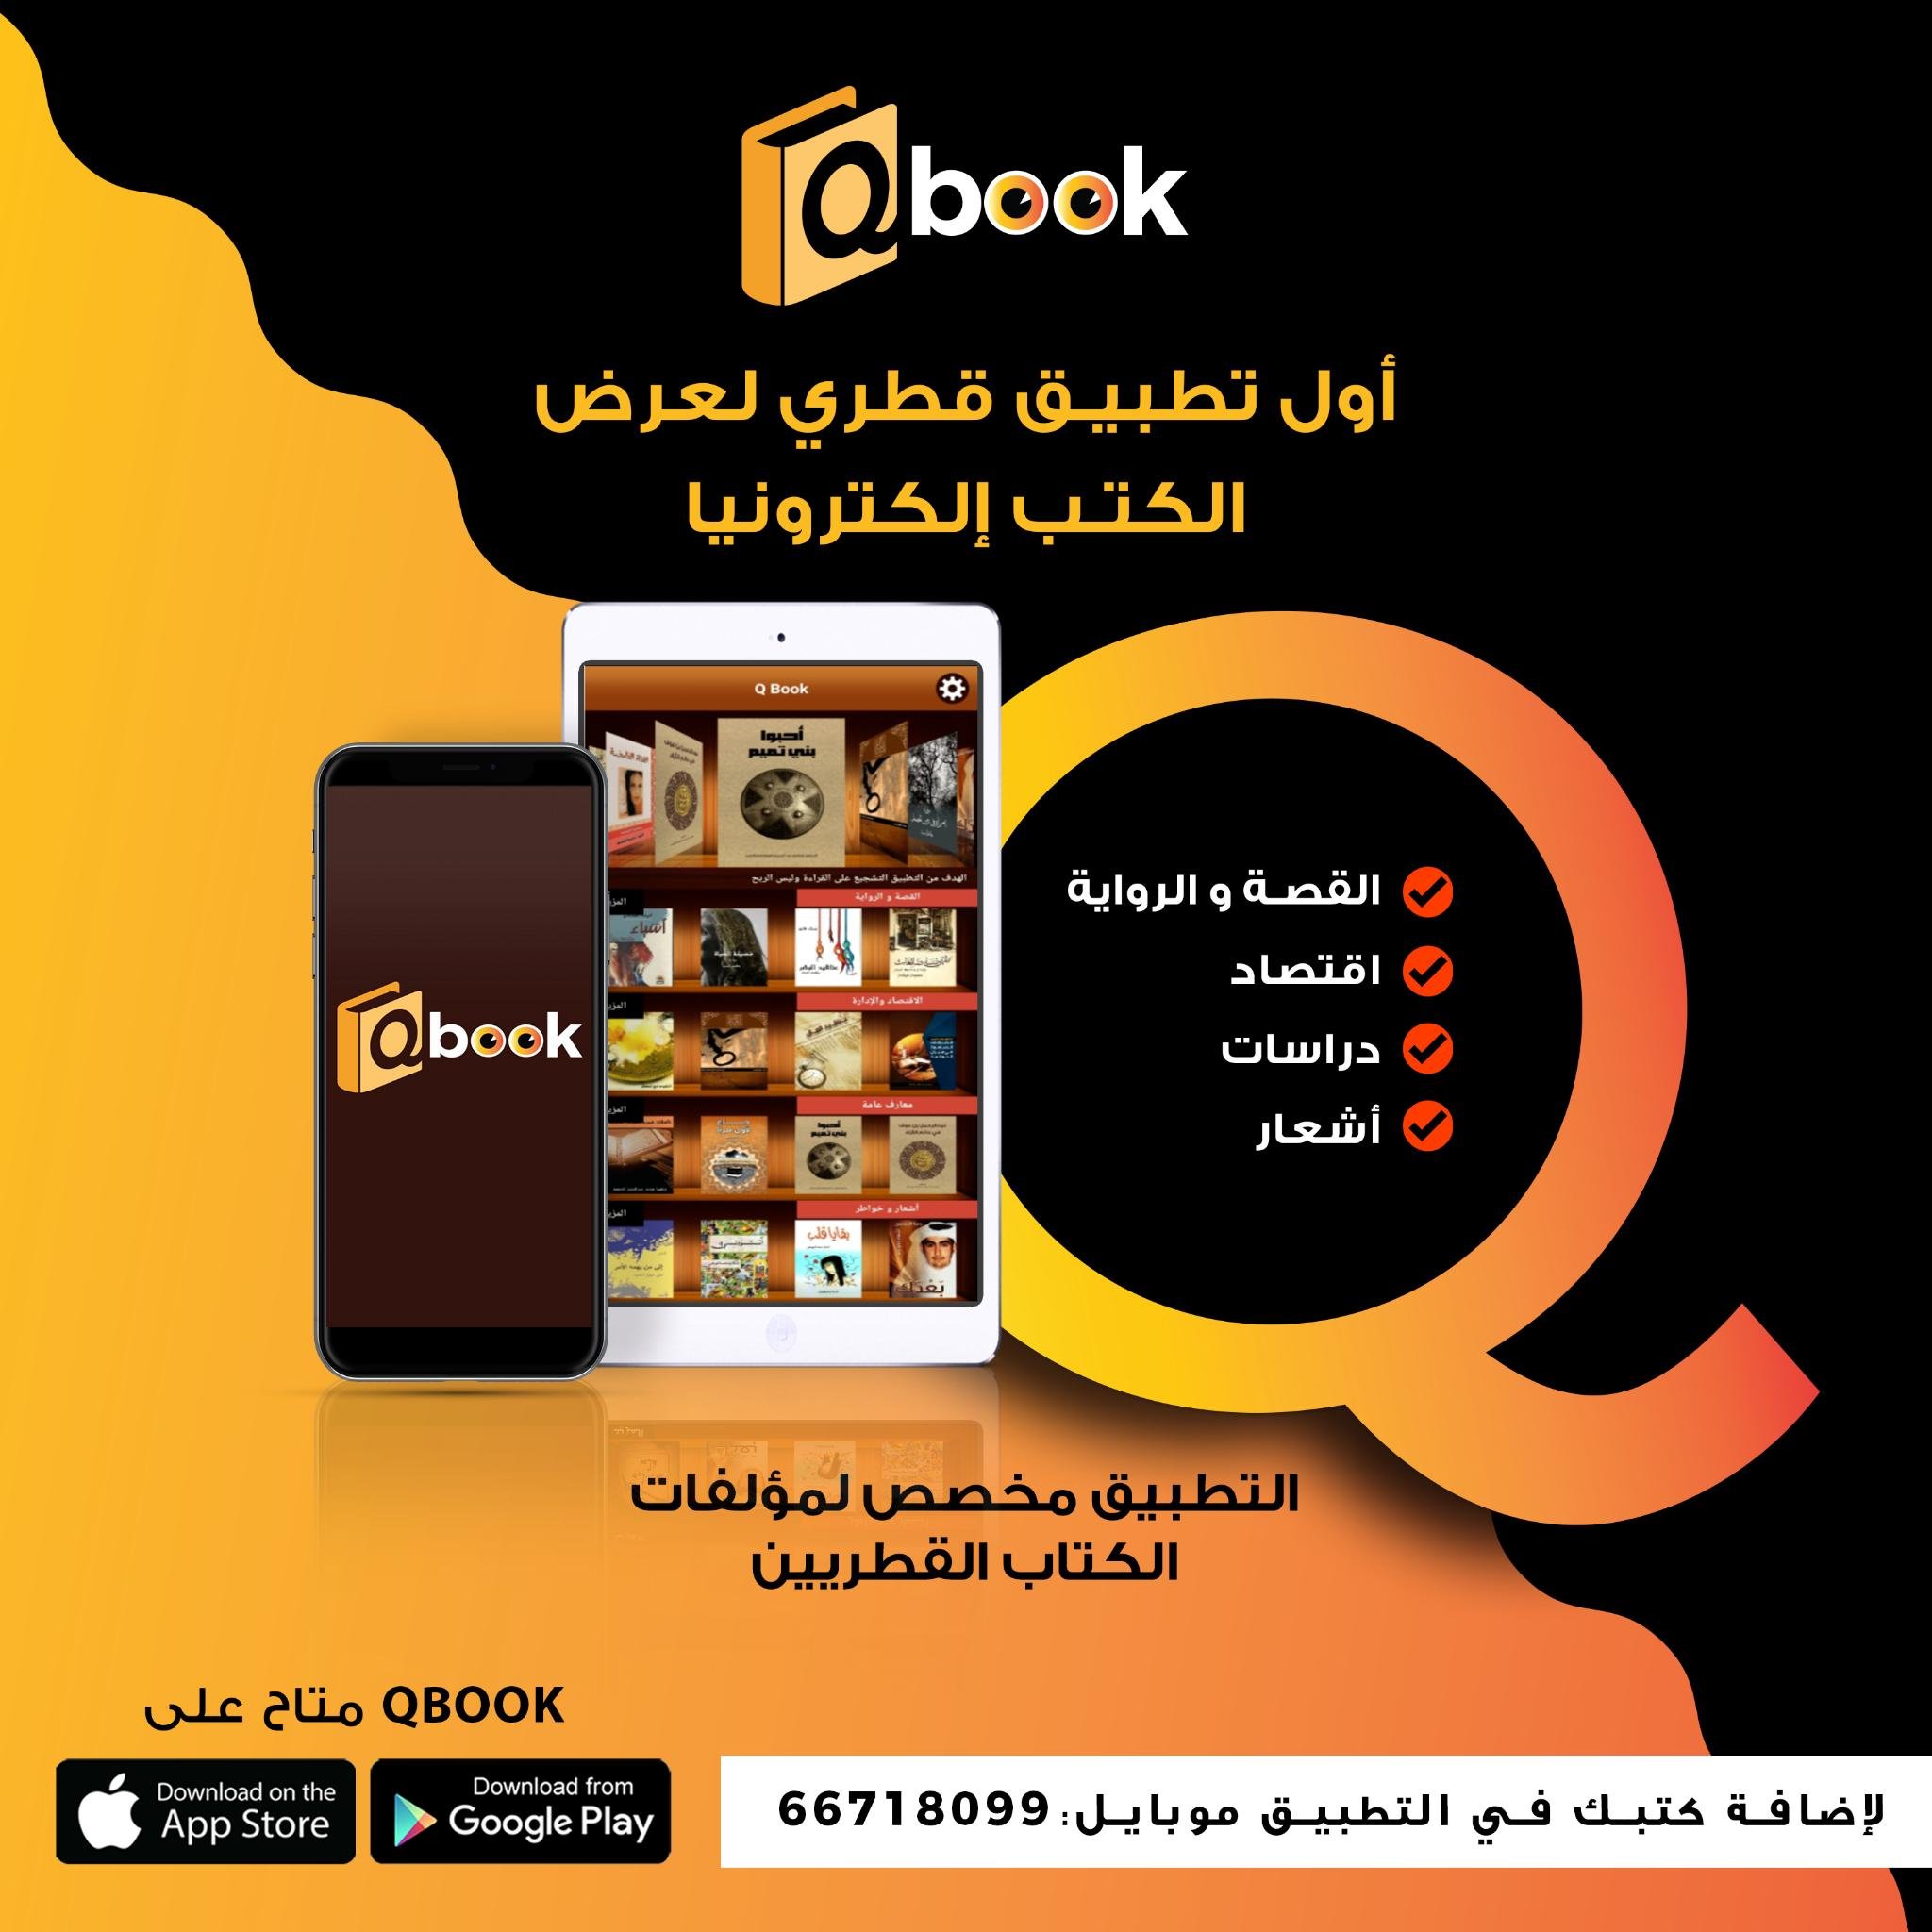 ‏‏‏QBOOK أول منصة إلكترونية قطرية للمؤلفين القطريين للتعريف بأعمالهم ومتجر لبيع الكتب والروايات والقصص وكتب الاقتصاد والمحاسبة والتدقيق والمعارف العامة